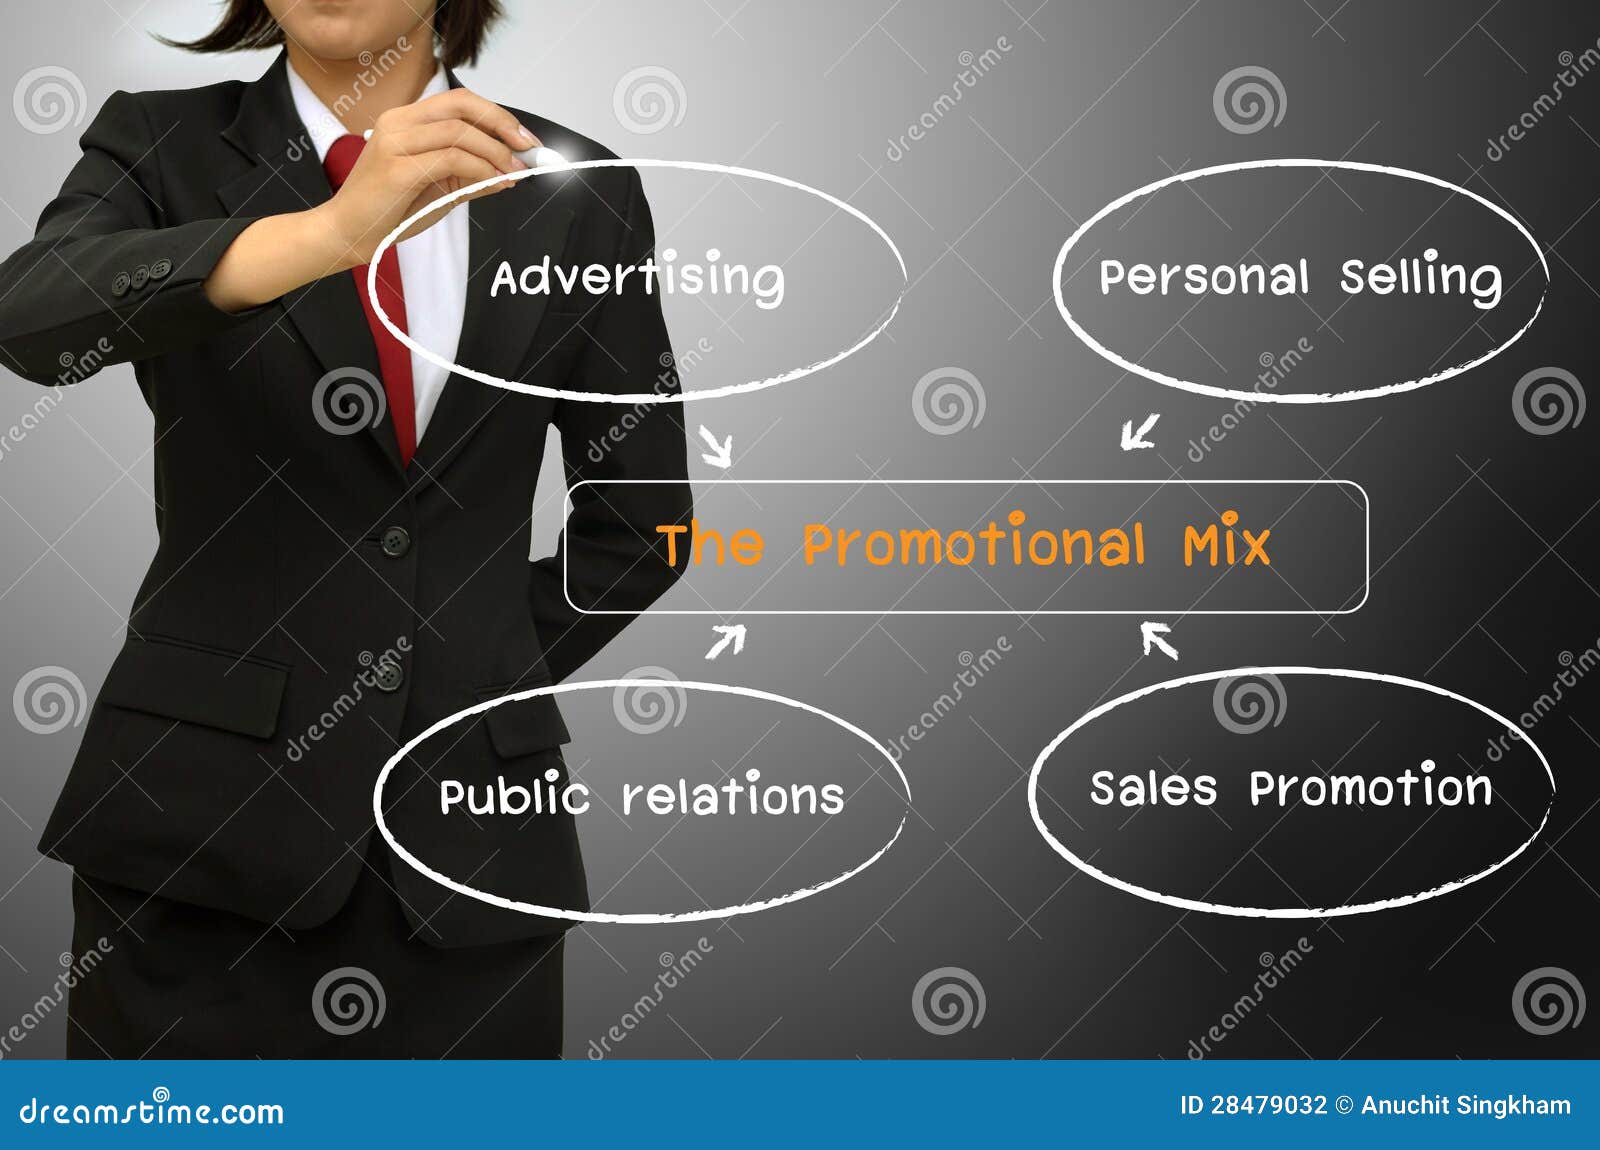 promotion mix diagram stock photo. Image of advertisement 28479032